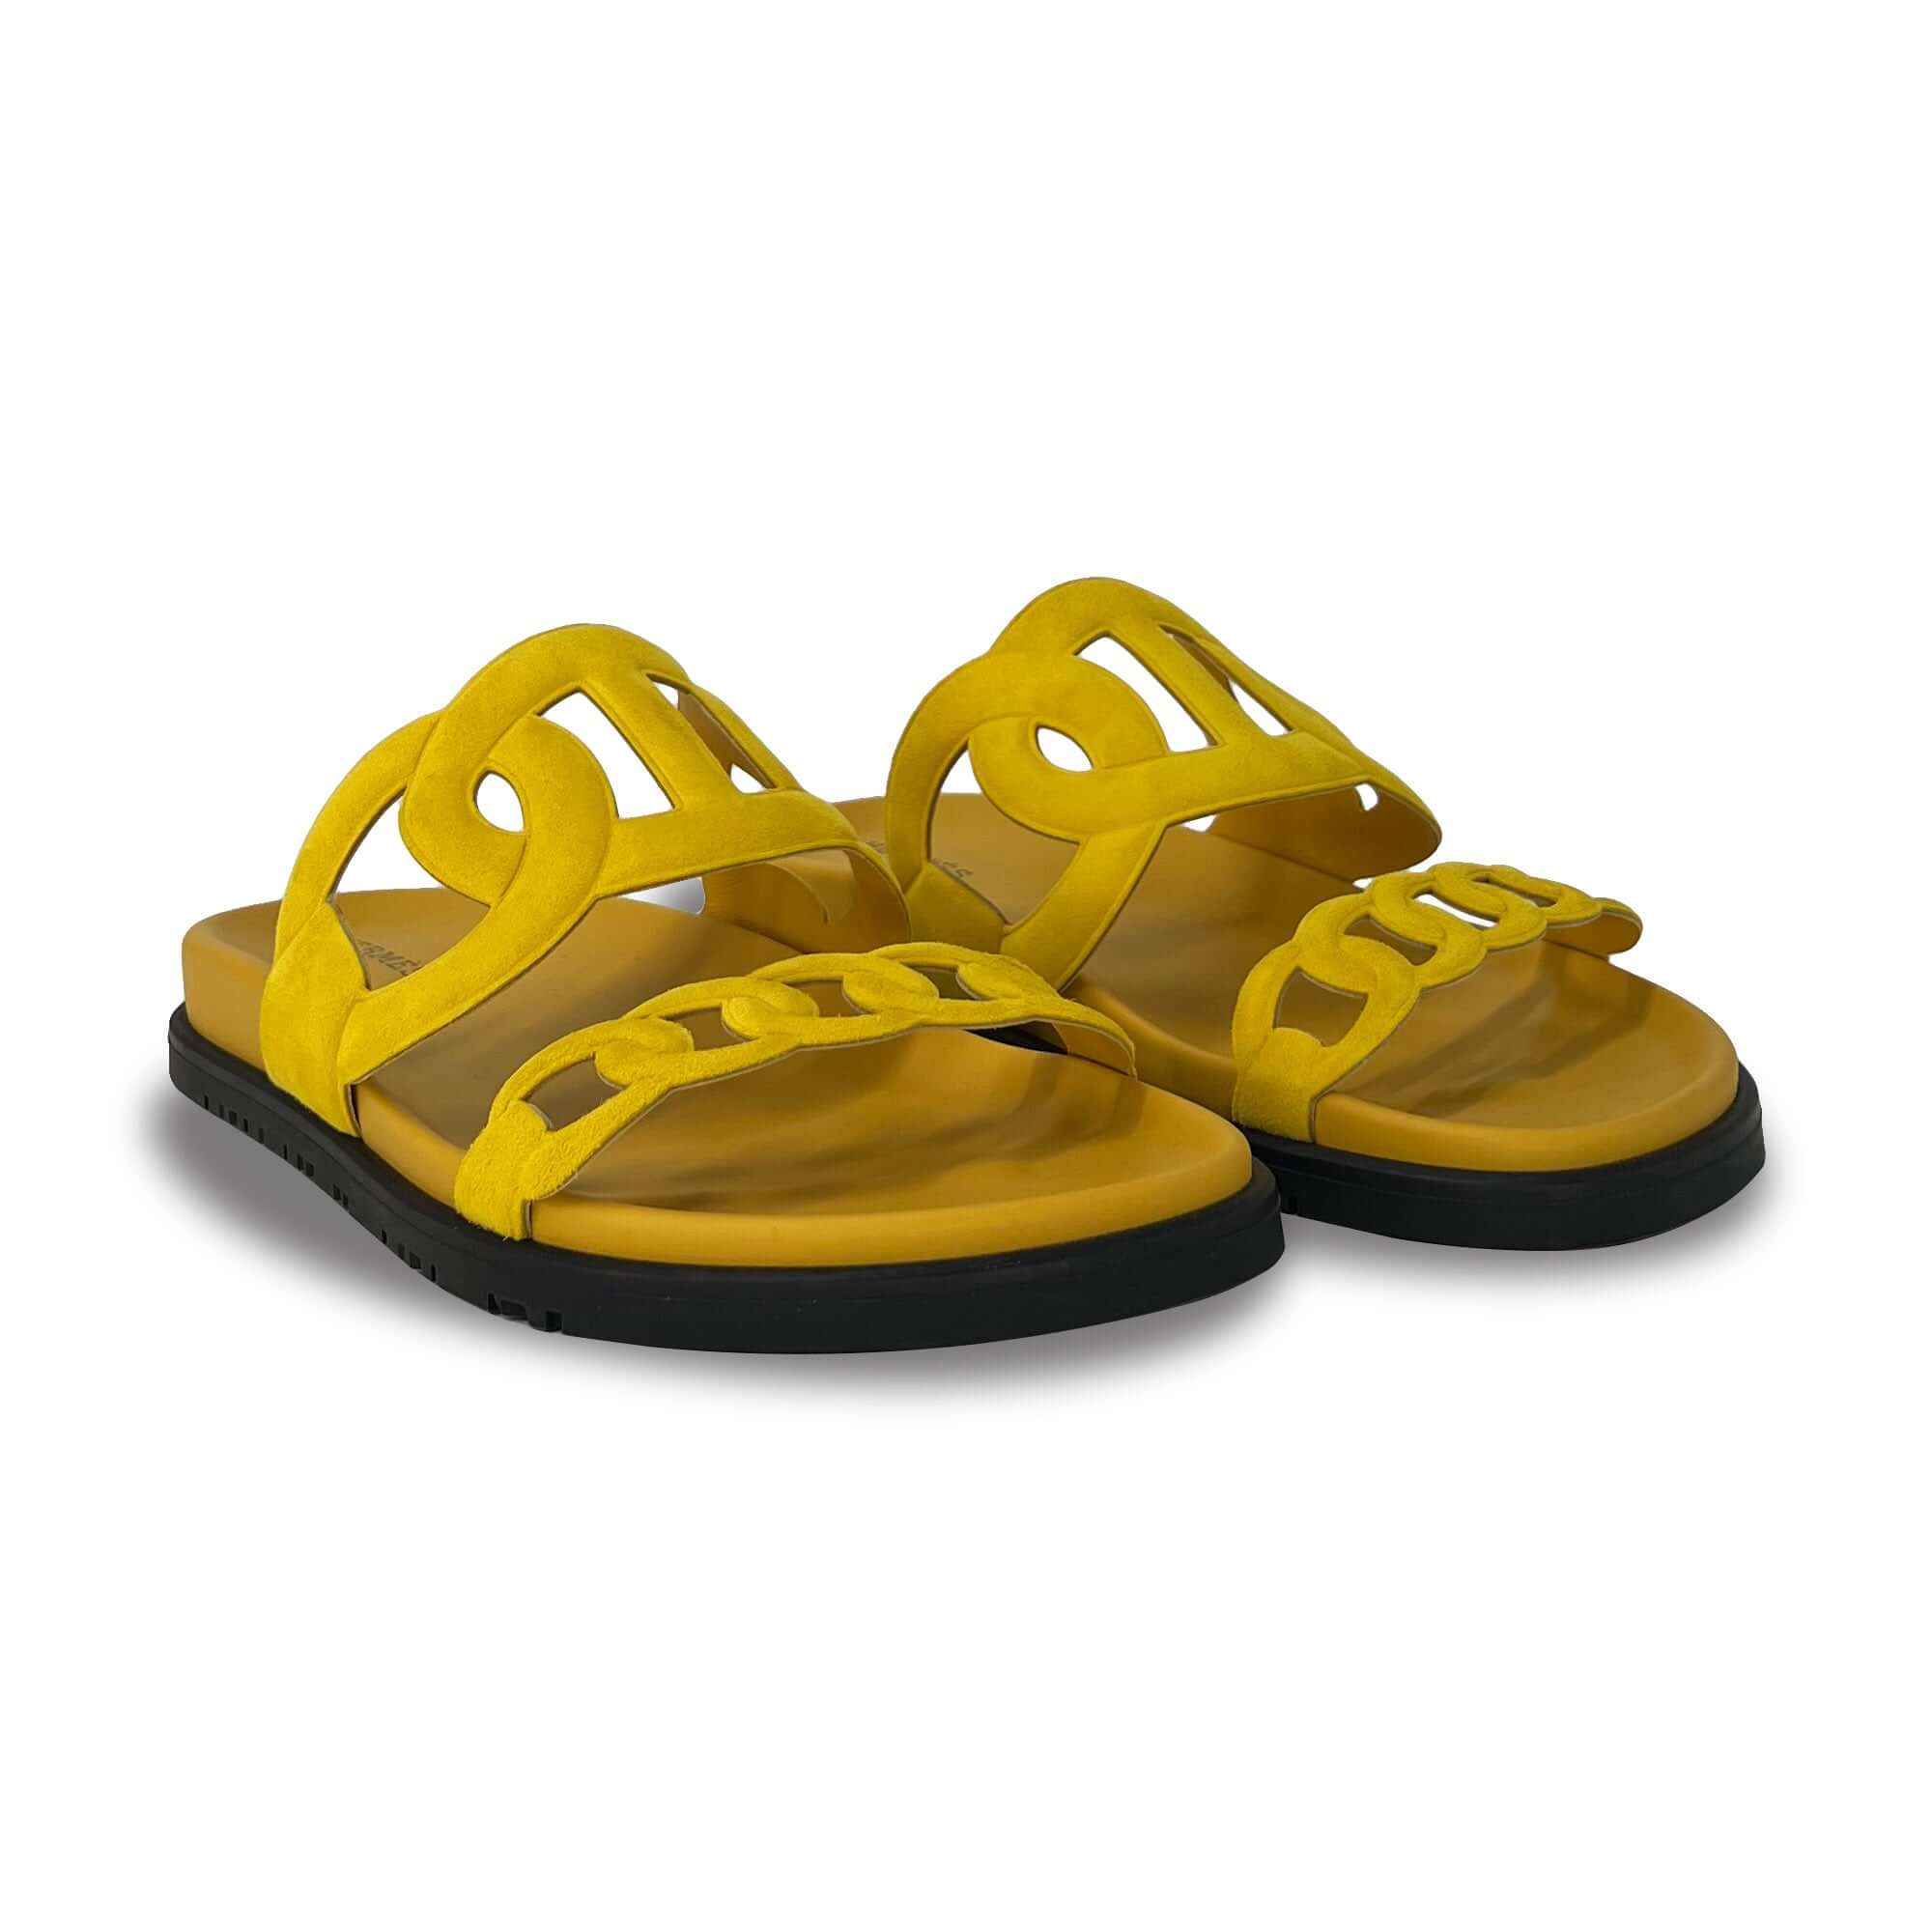 Sandals Designer By Birkenstock Size: 9